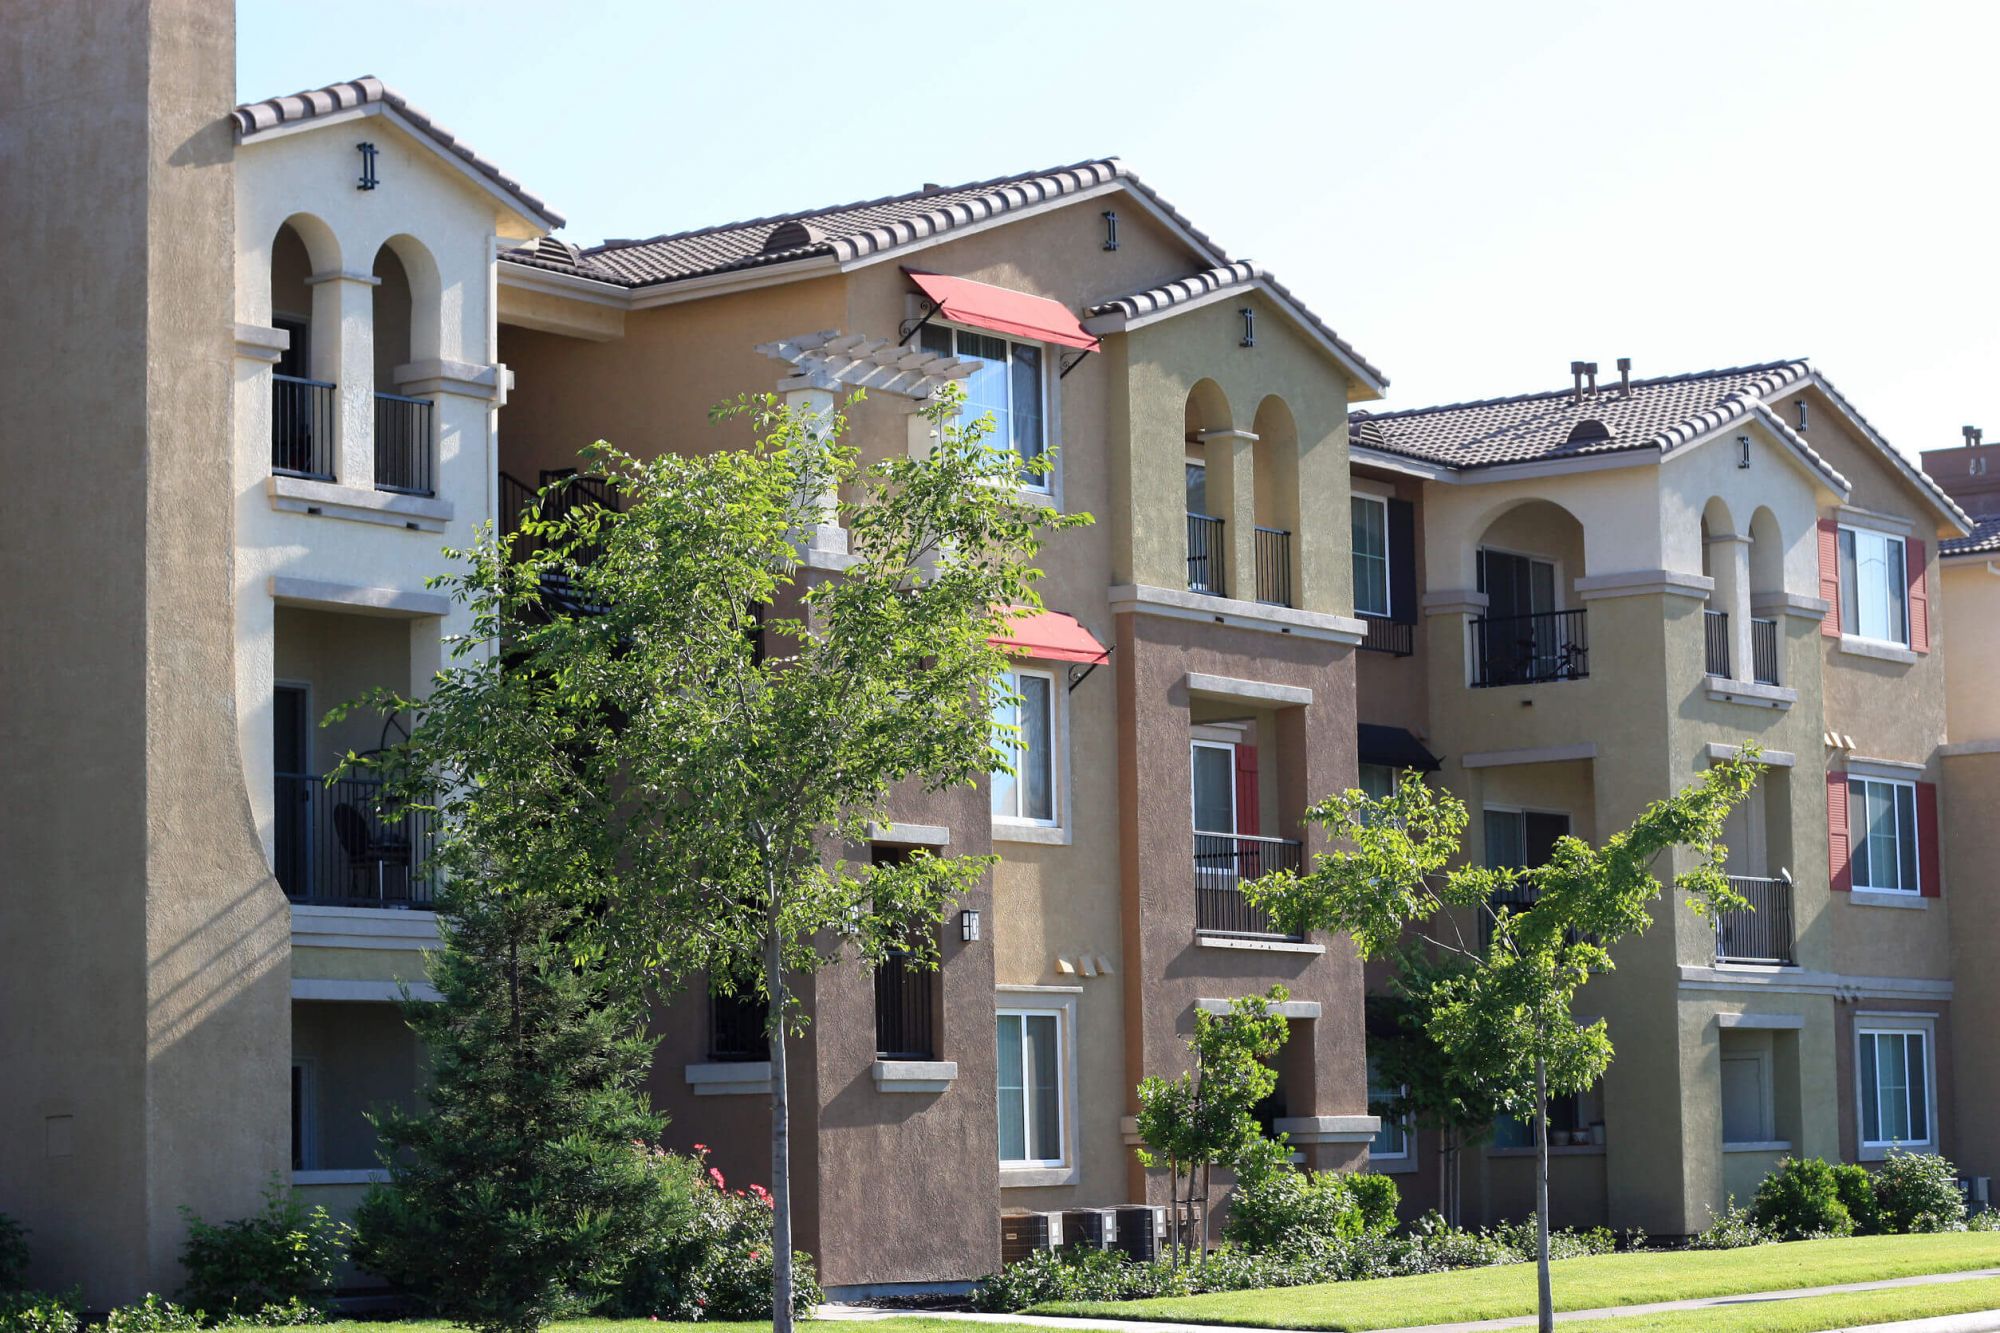 Apartment Building Insurance - Los Angeles, Agoura Hills, Thousand Oaks, Calabasas, West Lake Village, CA